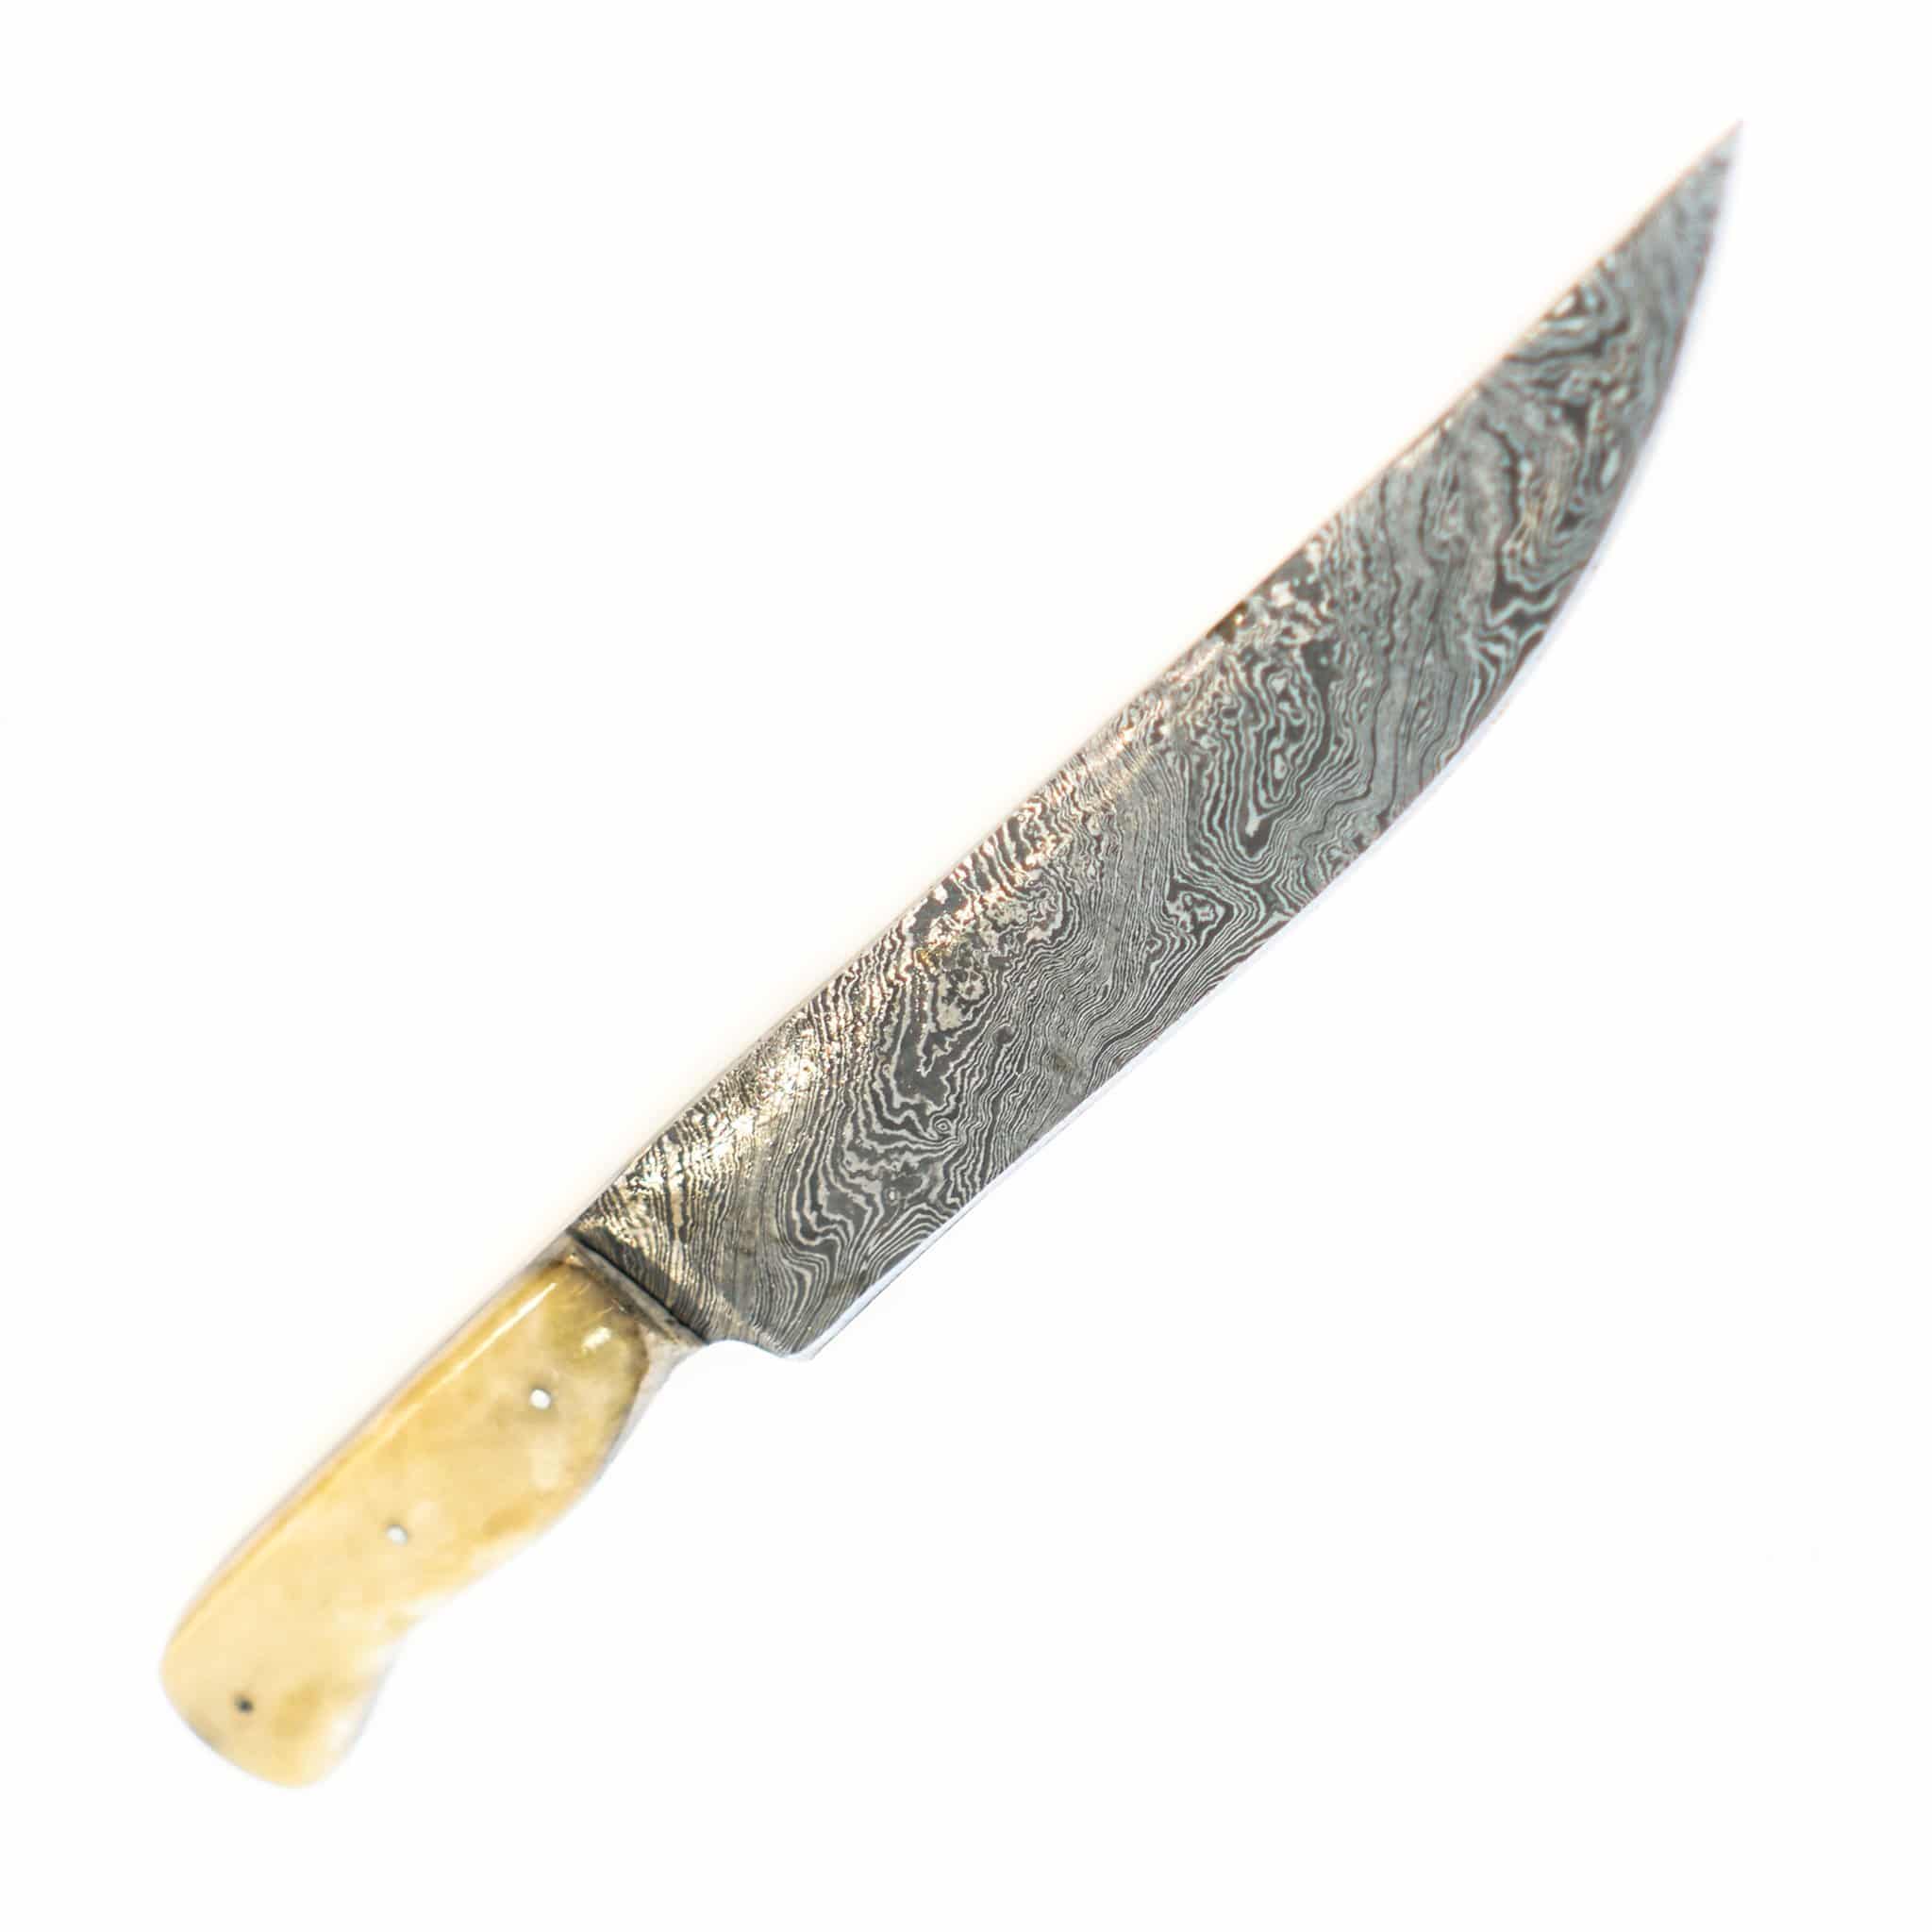 Handmade Damascus Steel Bowie Knife With Bone Handle